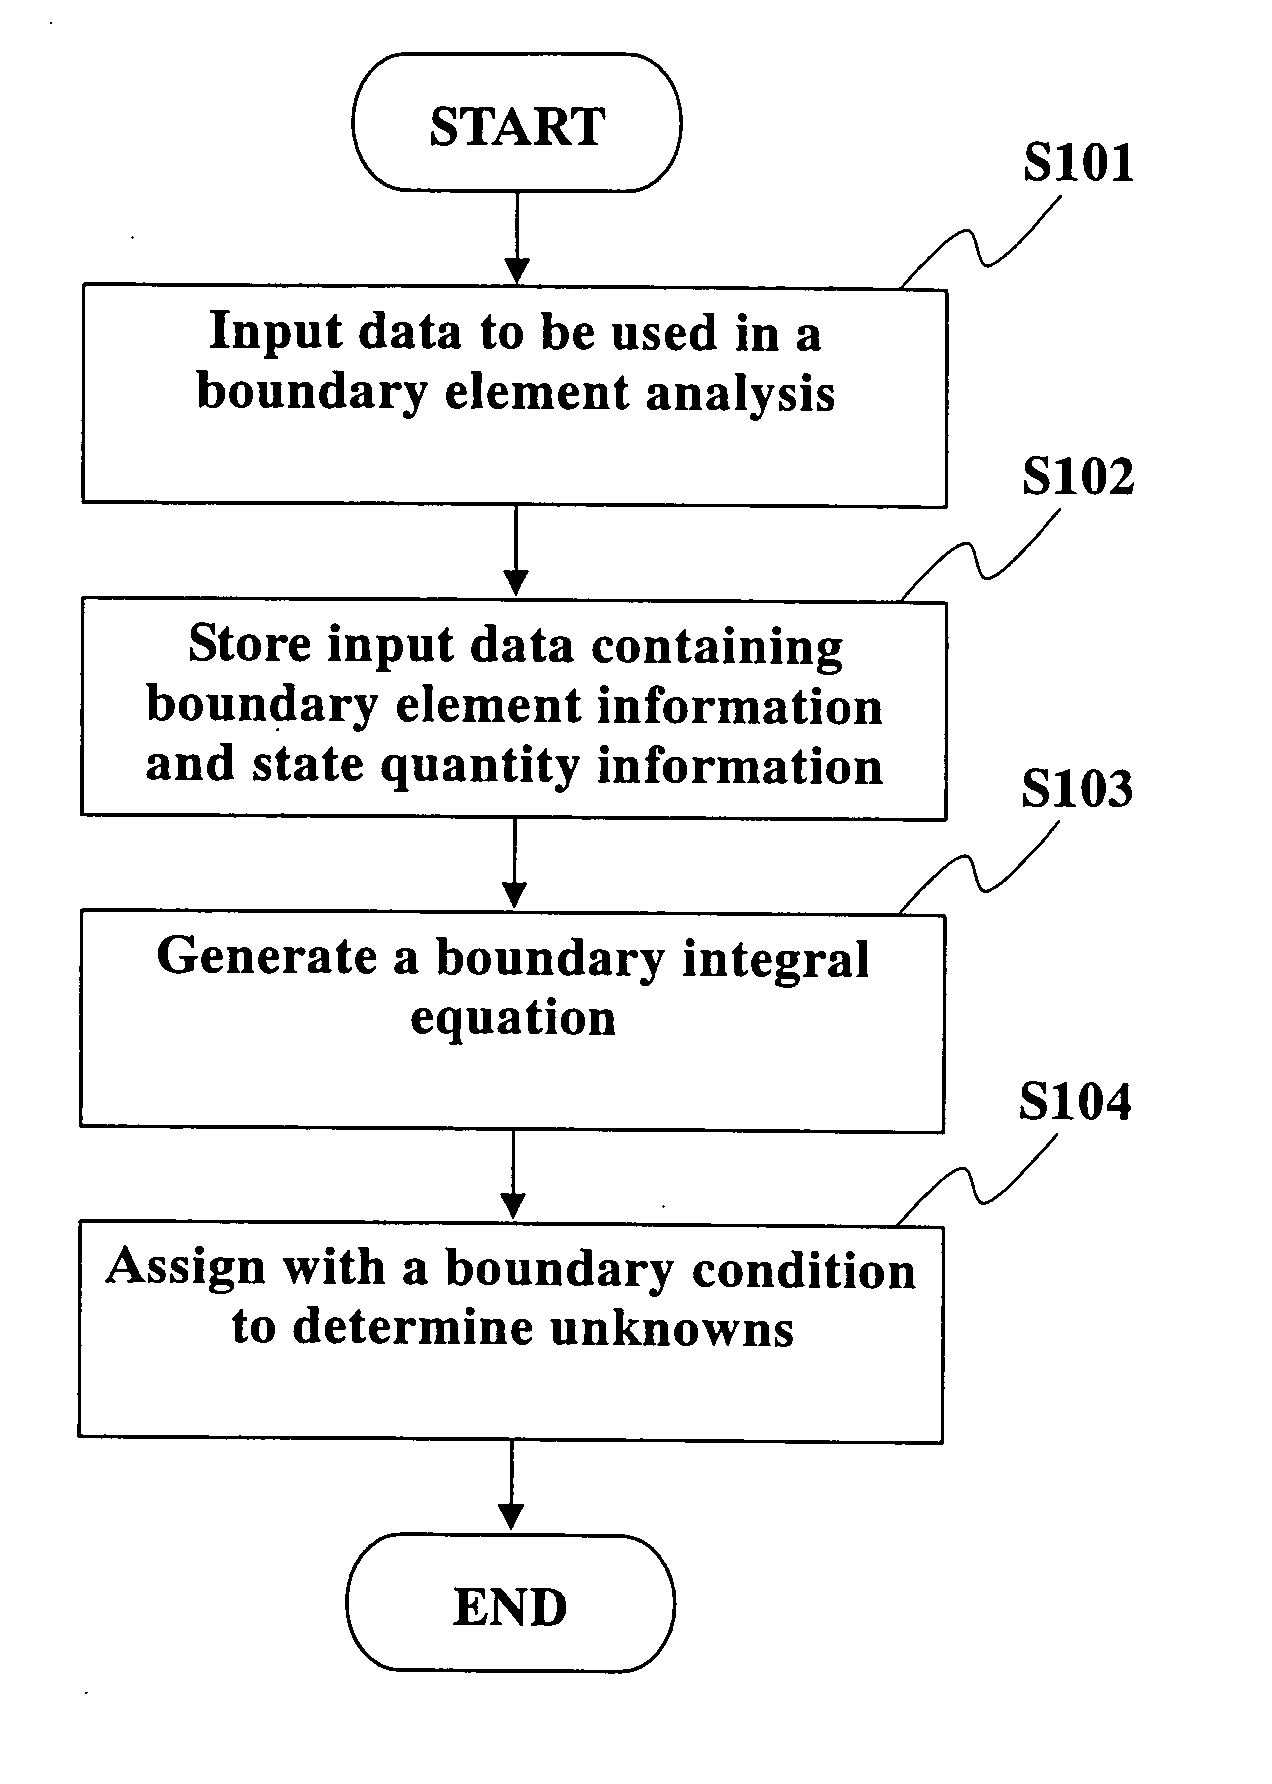 Boundary element analytic method and a boundary element analytic program